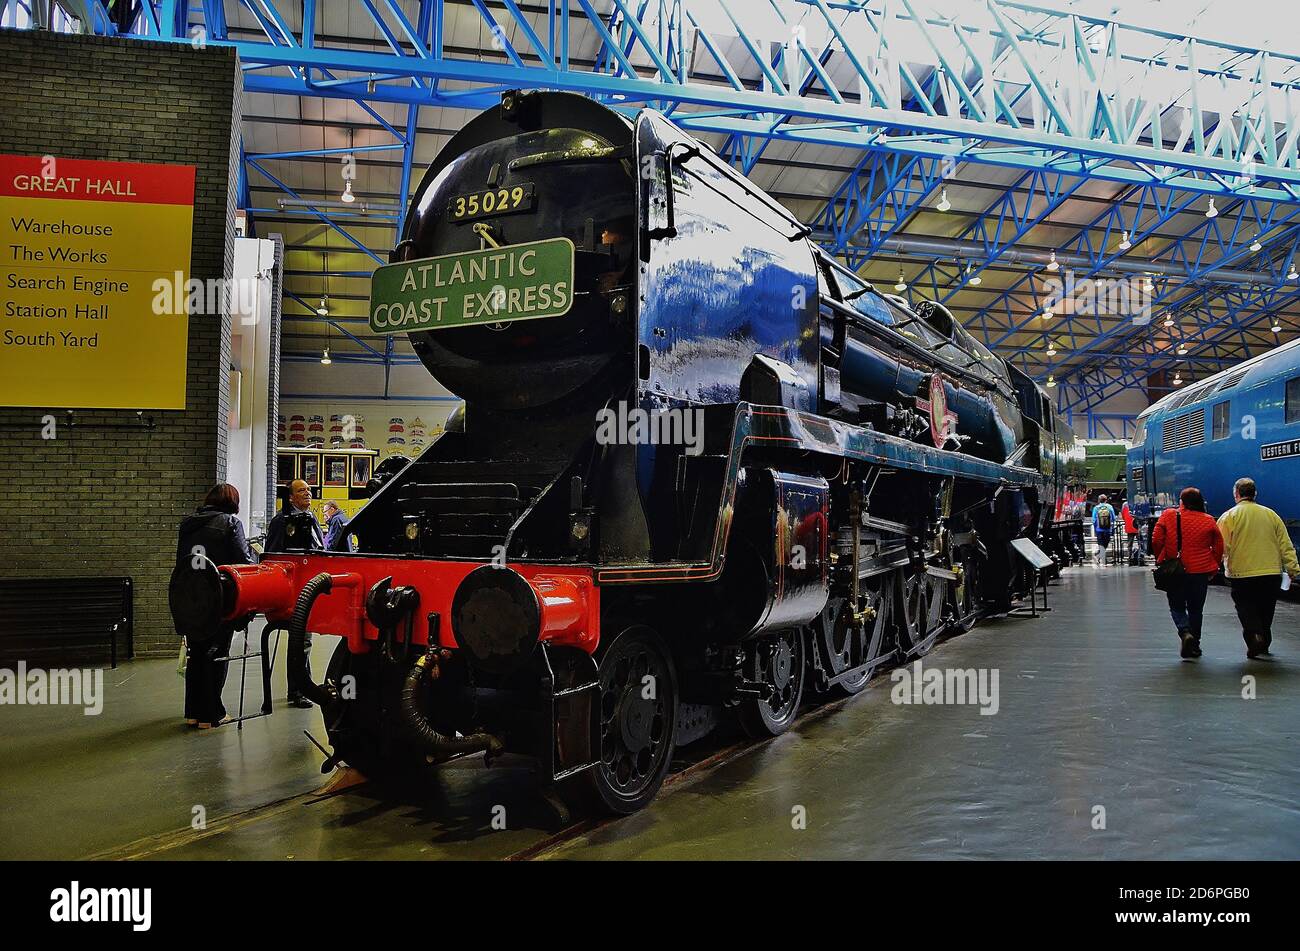 uk railways Stock Photo